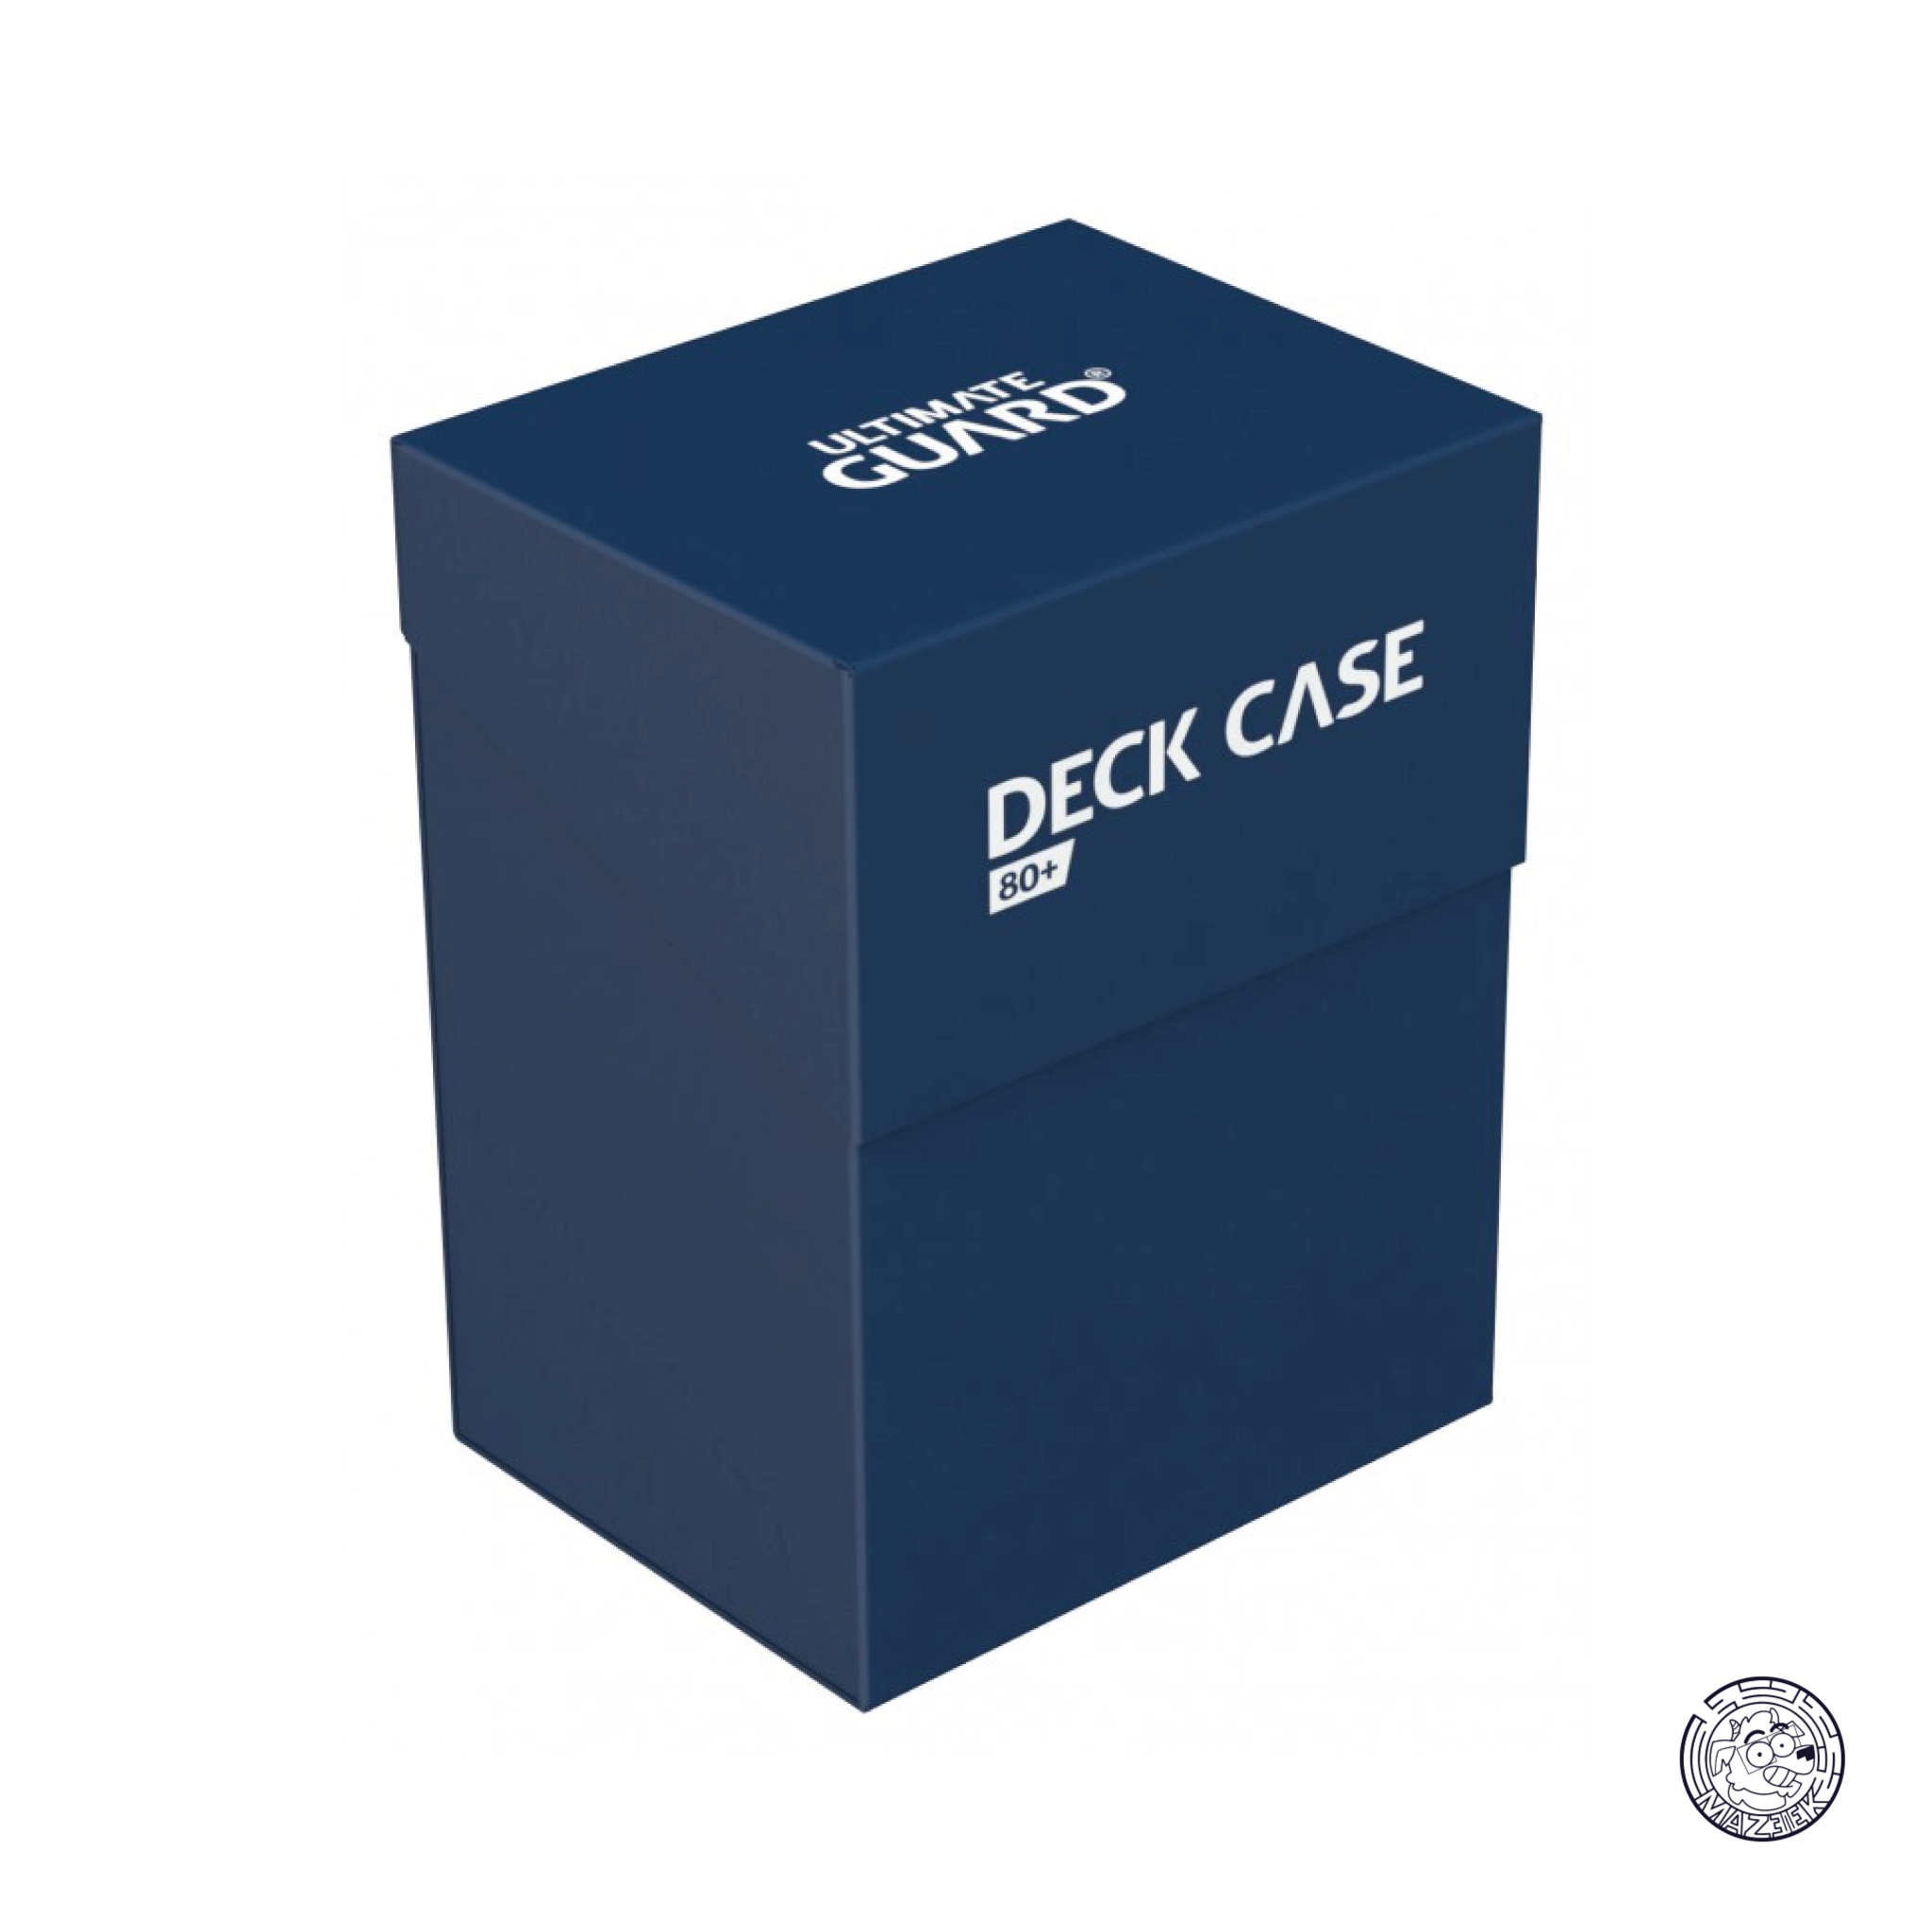 Ultimate Guard - Deck Case 80+ Standard Size (Blue)